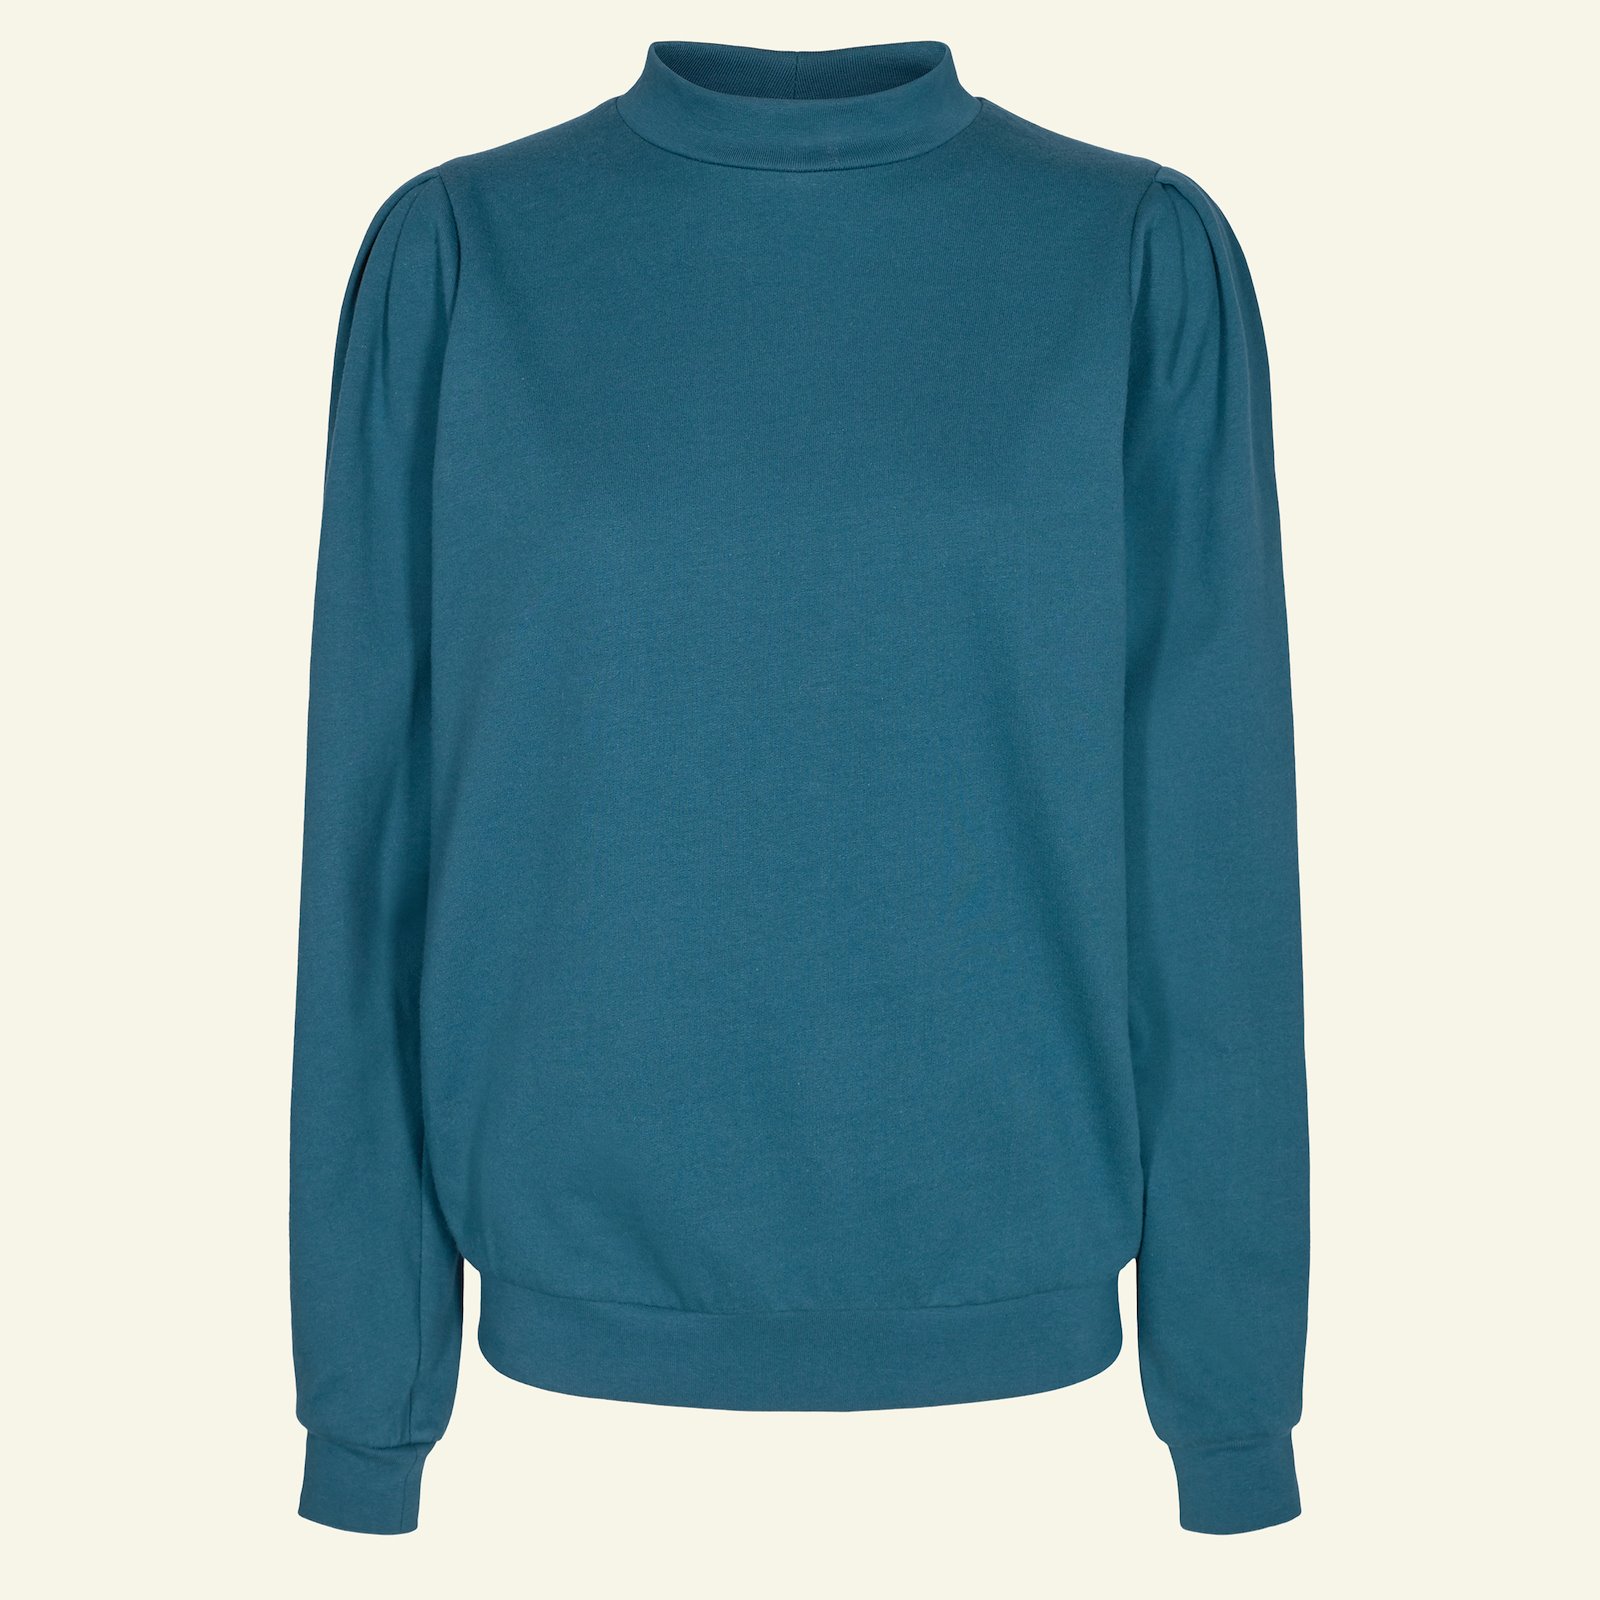 Sweatshirt with puff sleeves, XL p22074_211775_230657_sskit